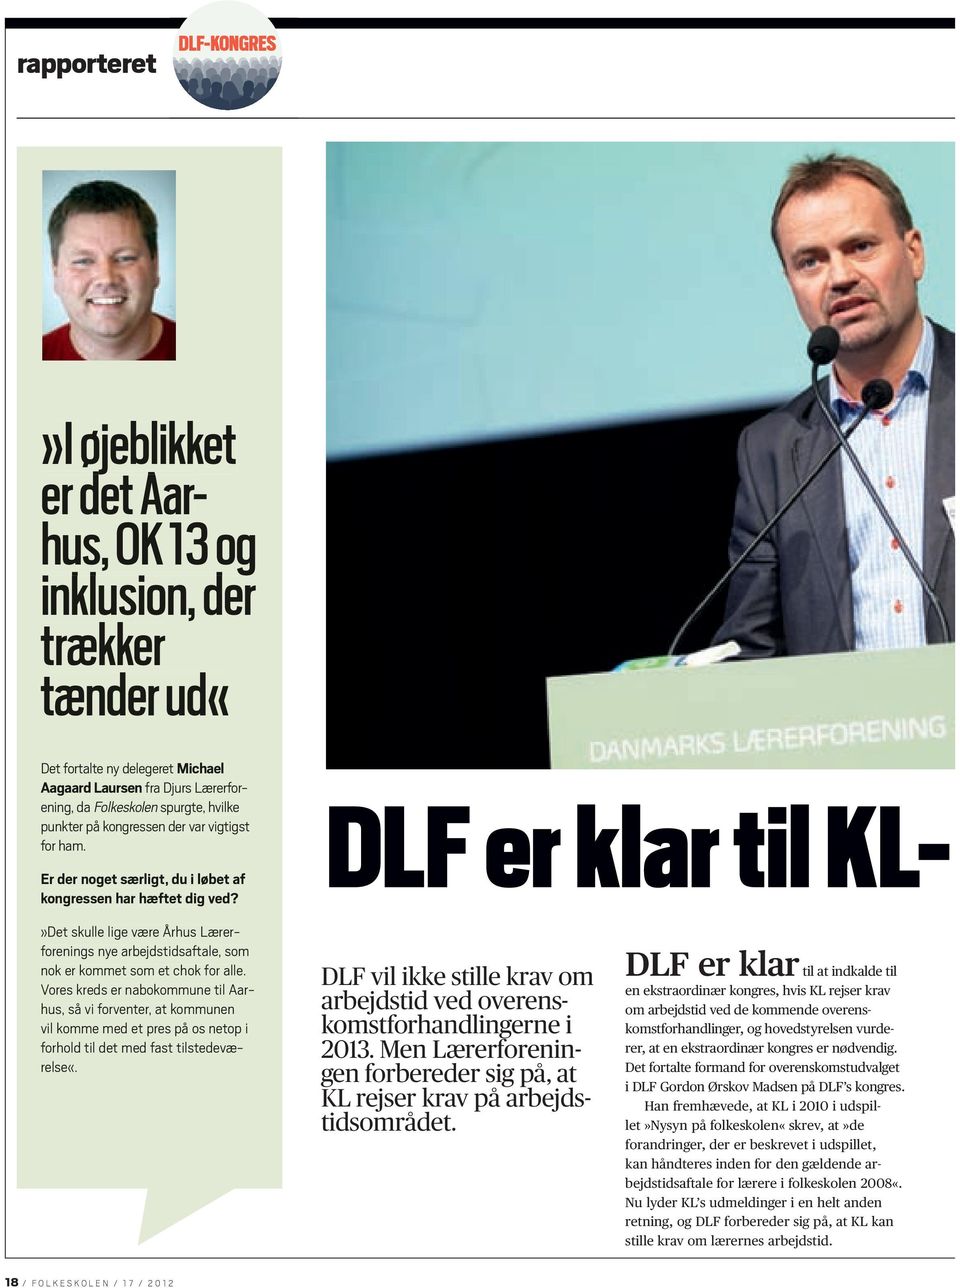 DLF er klar til KL-»Det skulle lige være Århus Lærerforenings nye arbejdstidsaftale, som nok er kommet som et chok for alle.